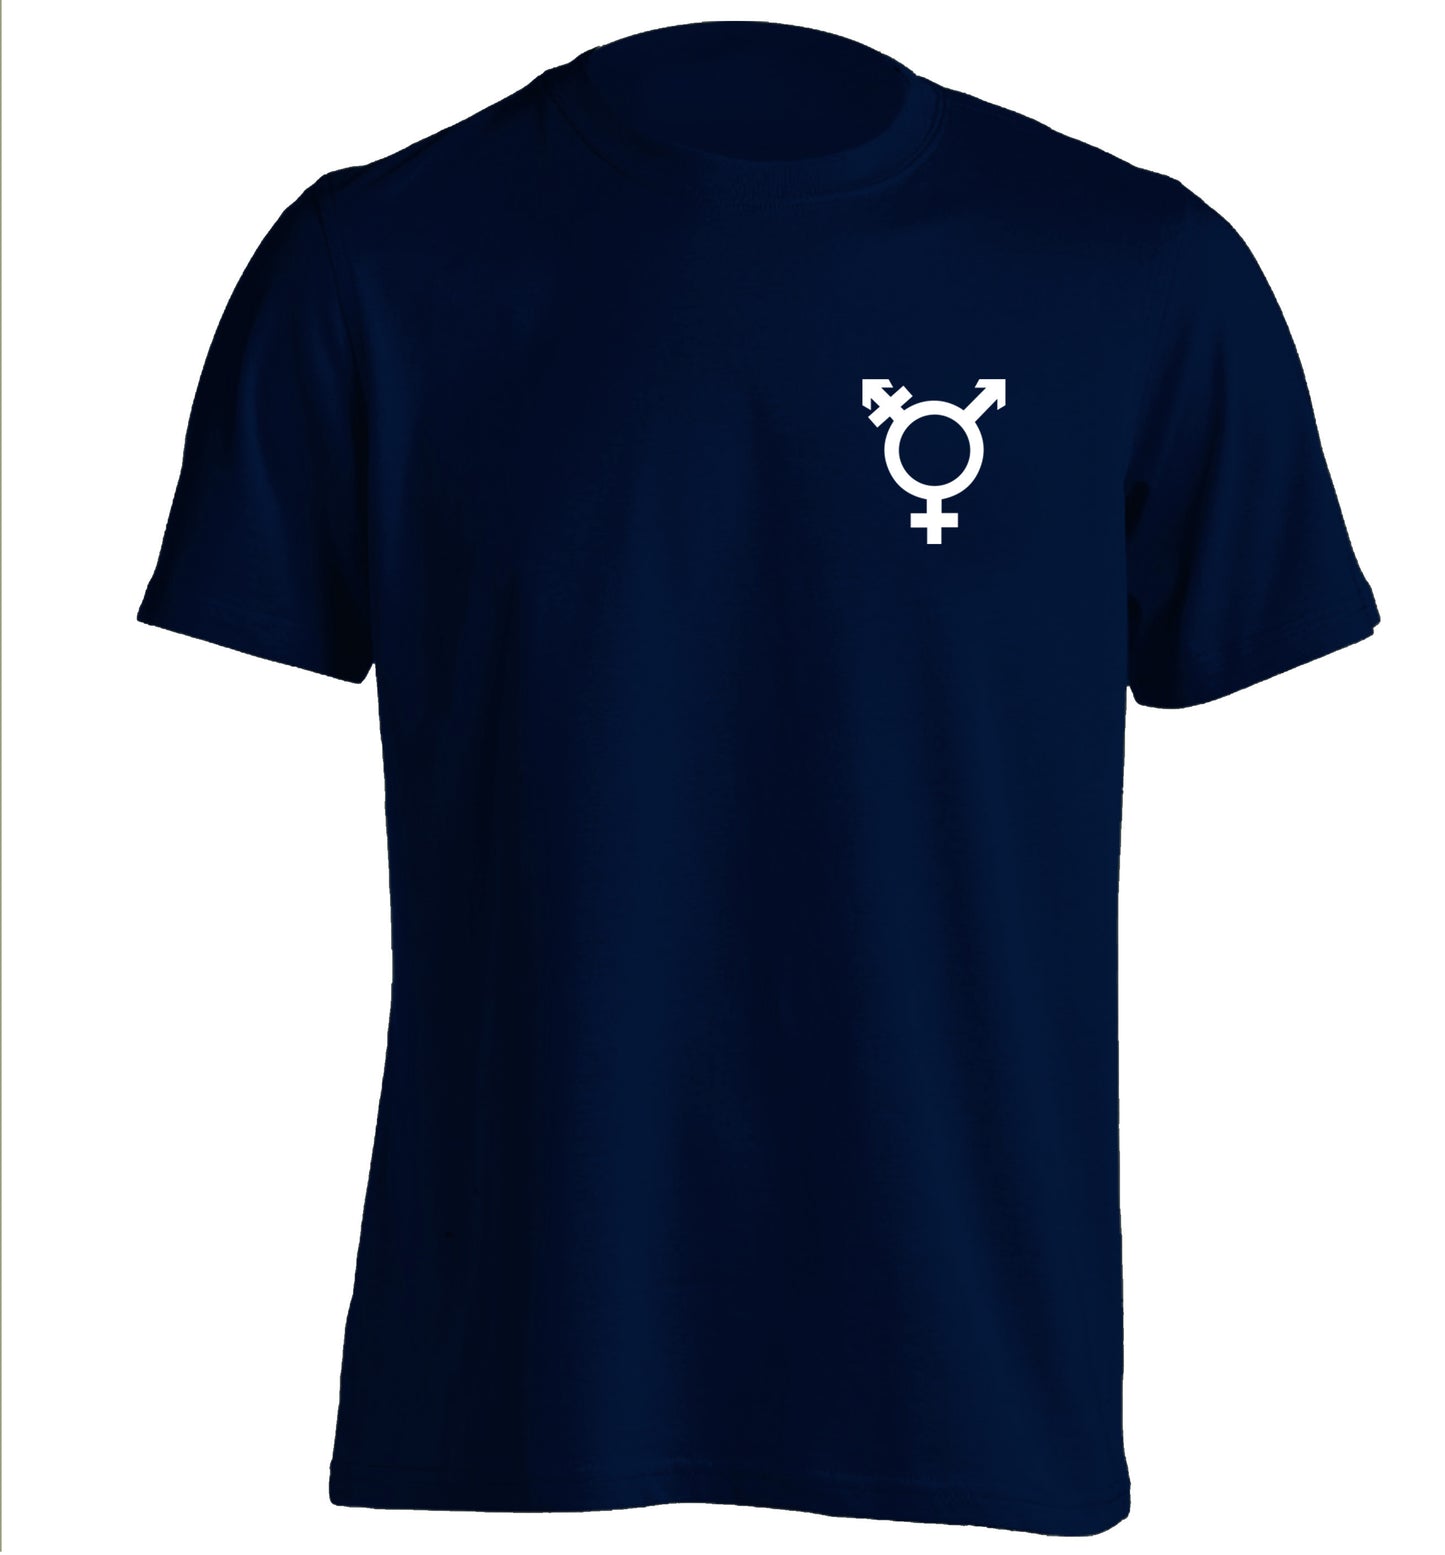 Trans gender symbol pocket adults unisex navy Tshirt 2XL